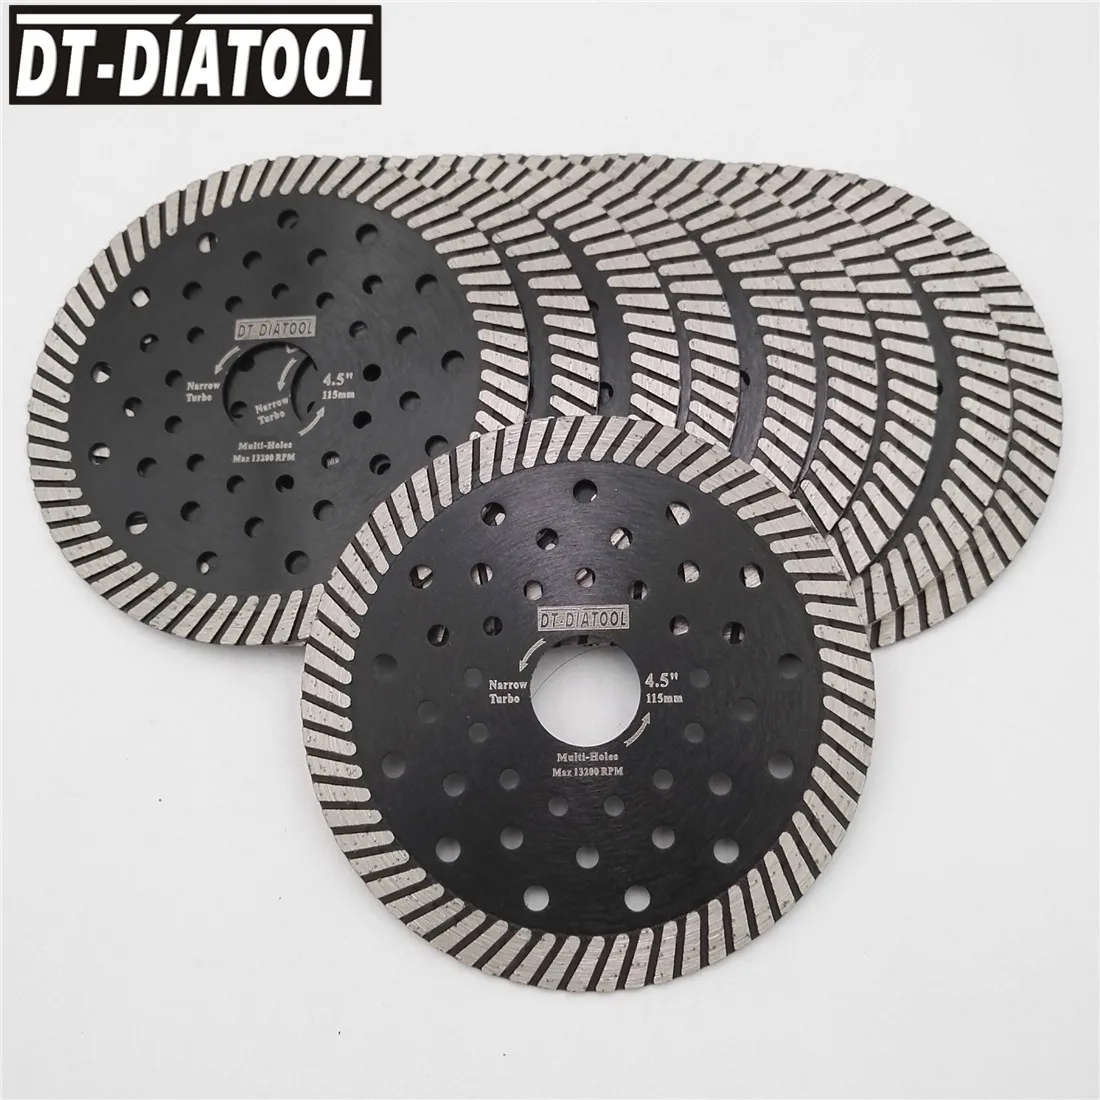 DT-DIATOOL 10pcs 4.5 inch Diamond Hot Pressed Narrow Turbo Saw Blade Cutting disc Granite Marble Concrete Masonry Diameter115mm